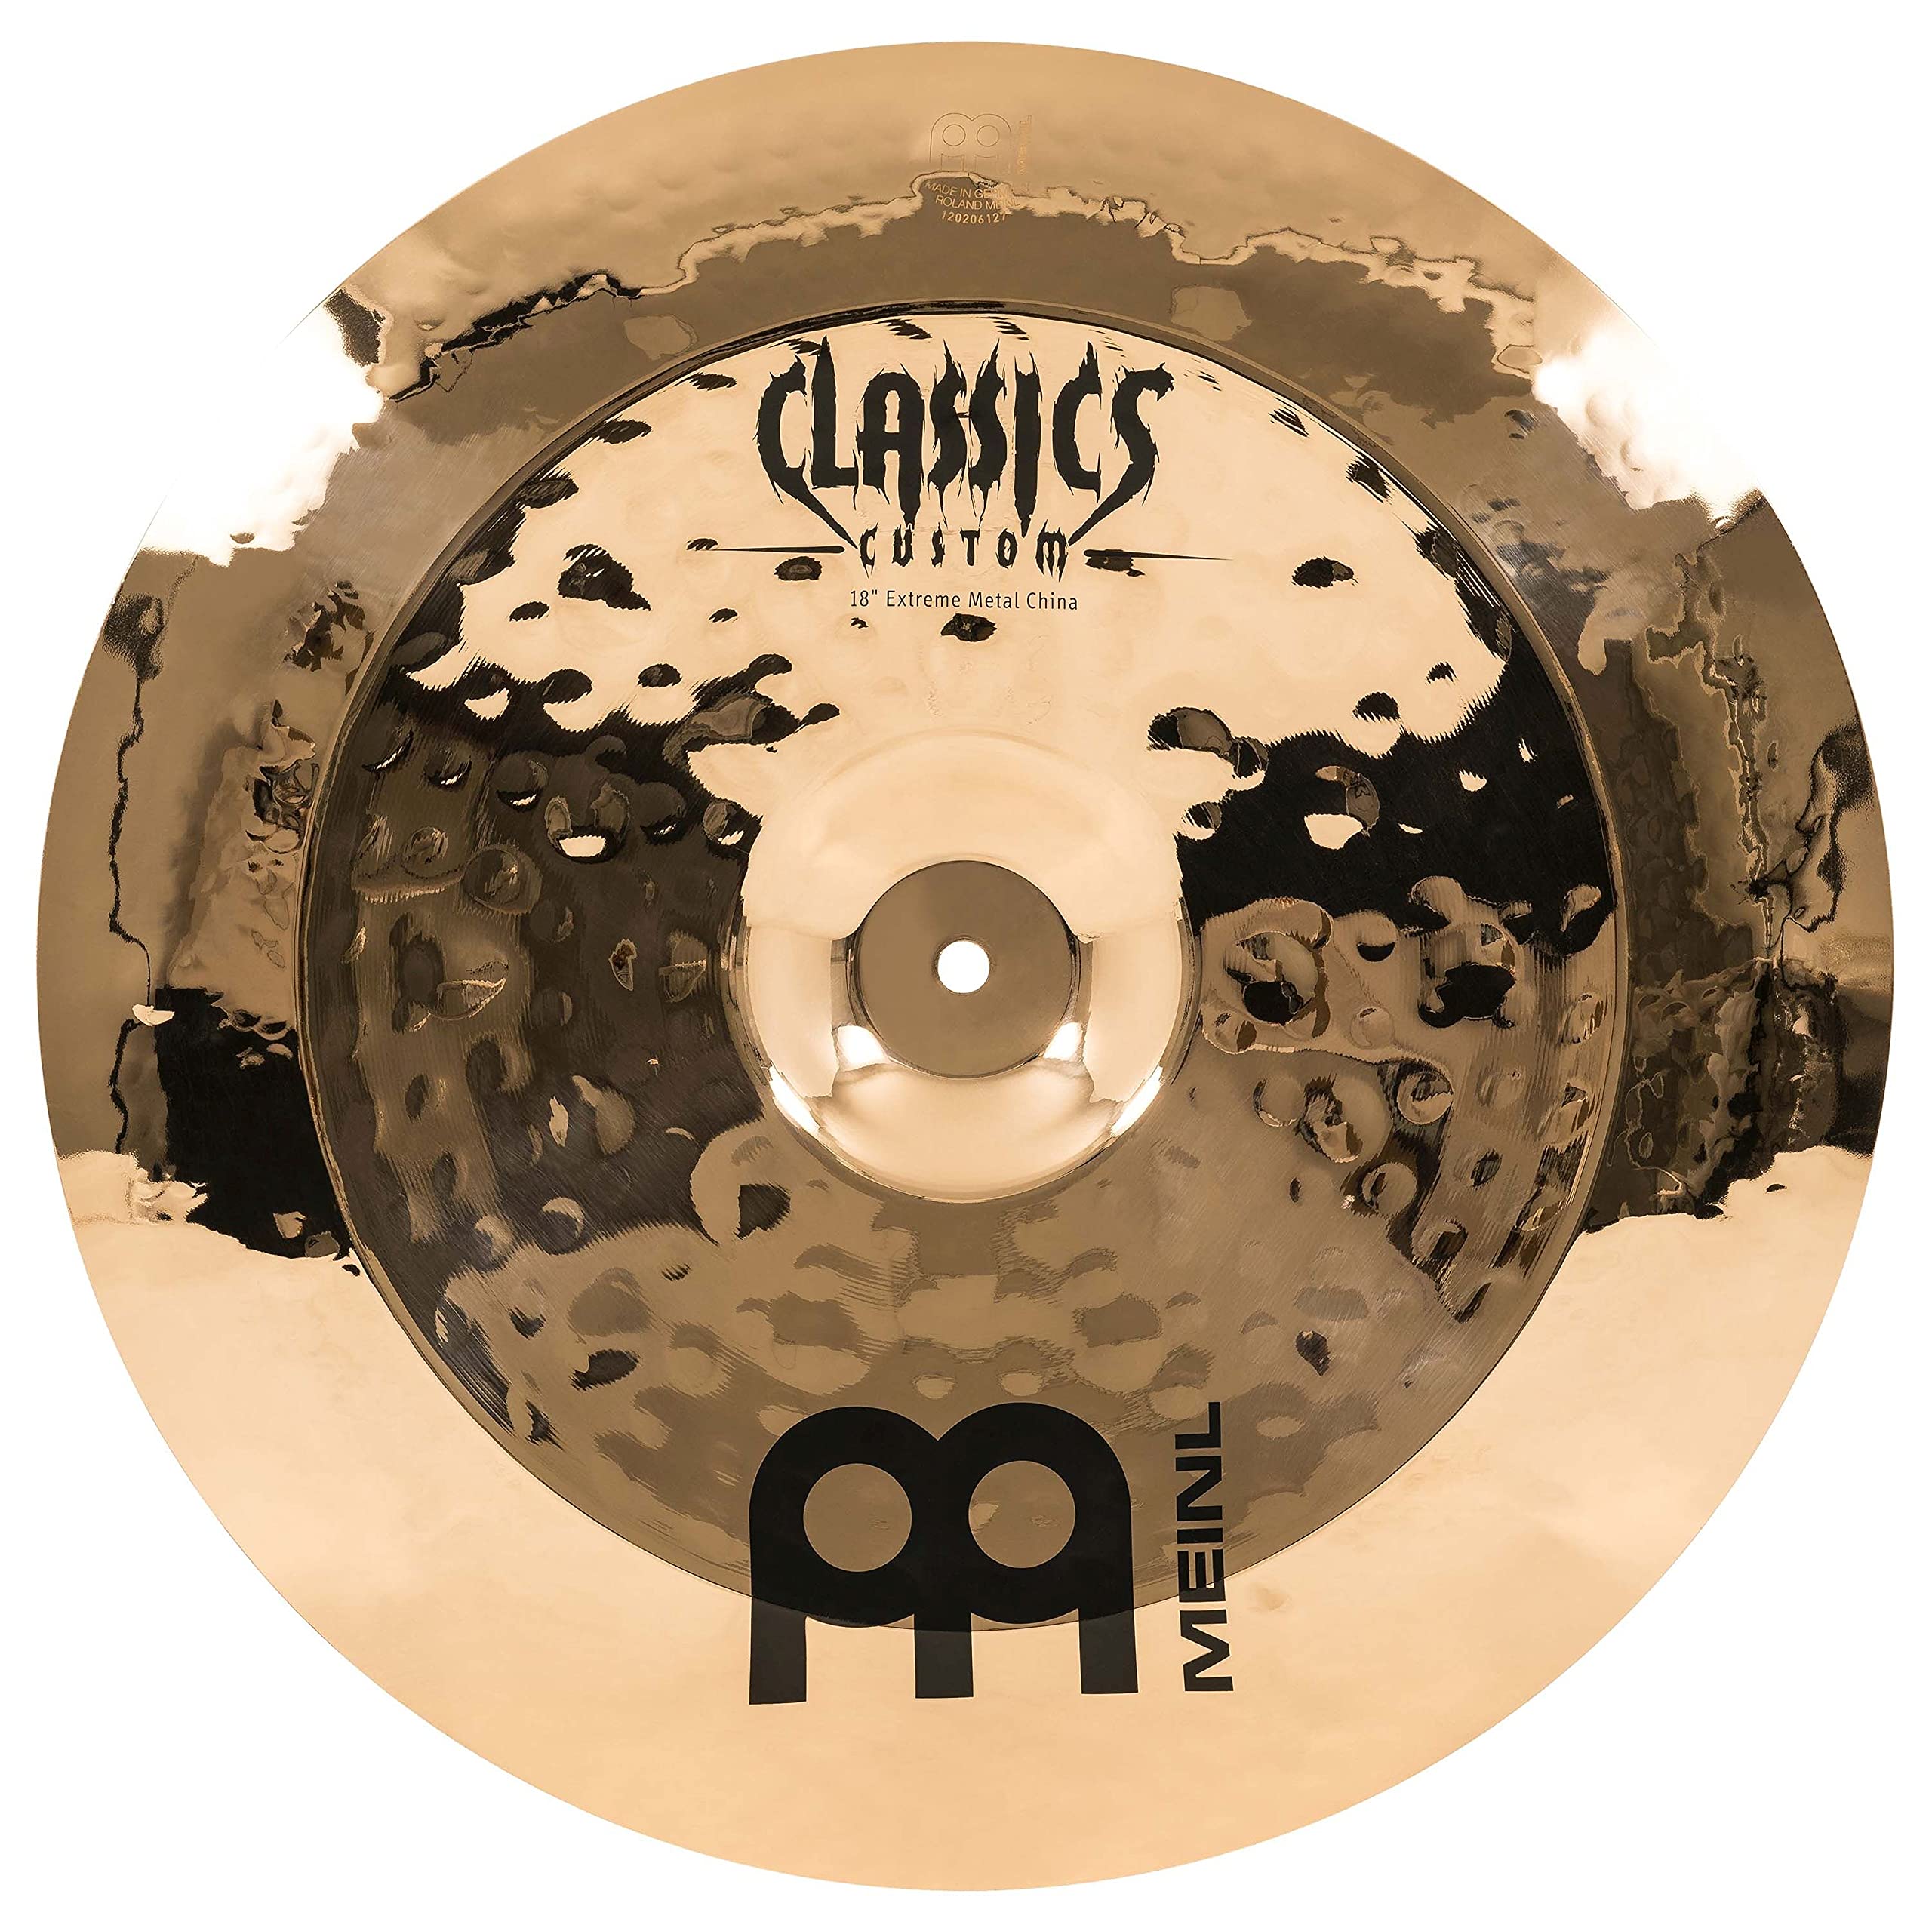 Meinl Cymbals Classics Custom Extreme Metal China — 18 Zoll (Video) Schlagzeug Becken (45,72cm) B12 Bronze, Brilliantes Finish (CC18EMCH-B)